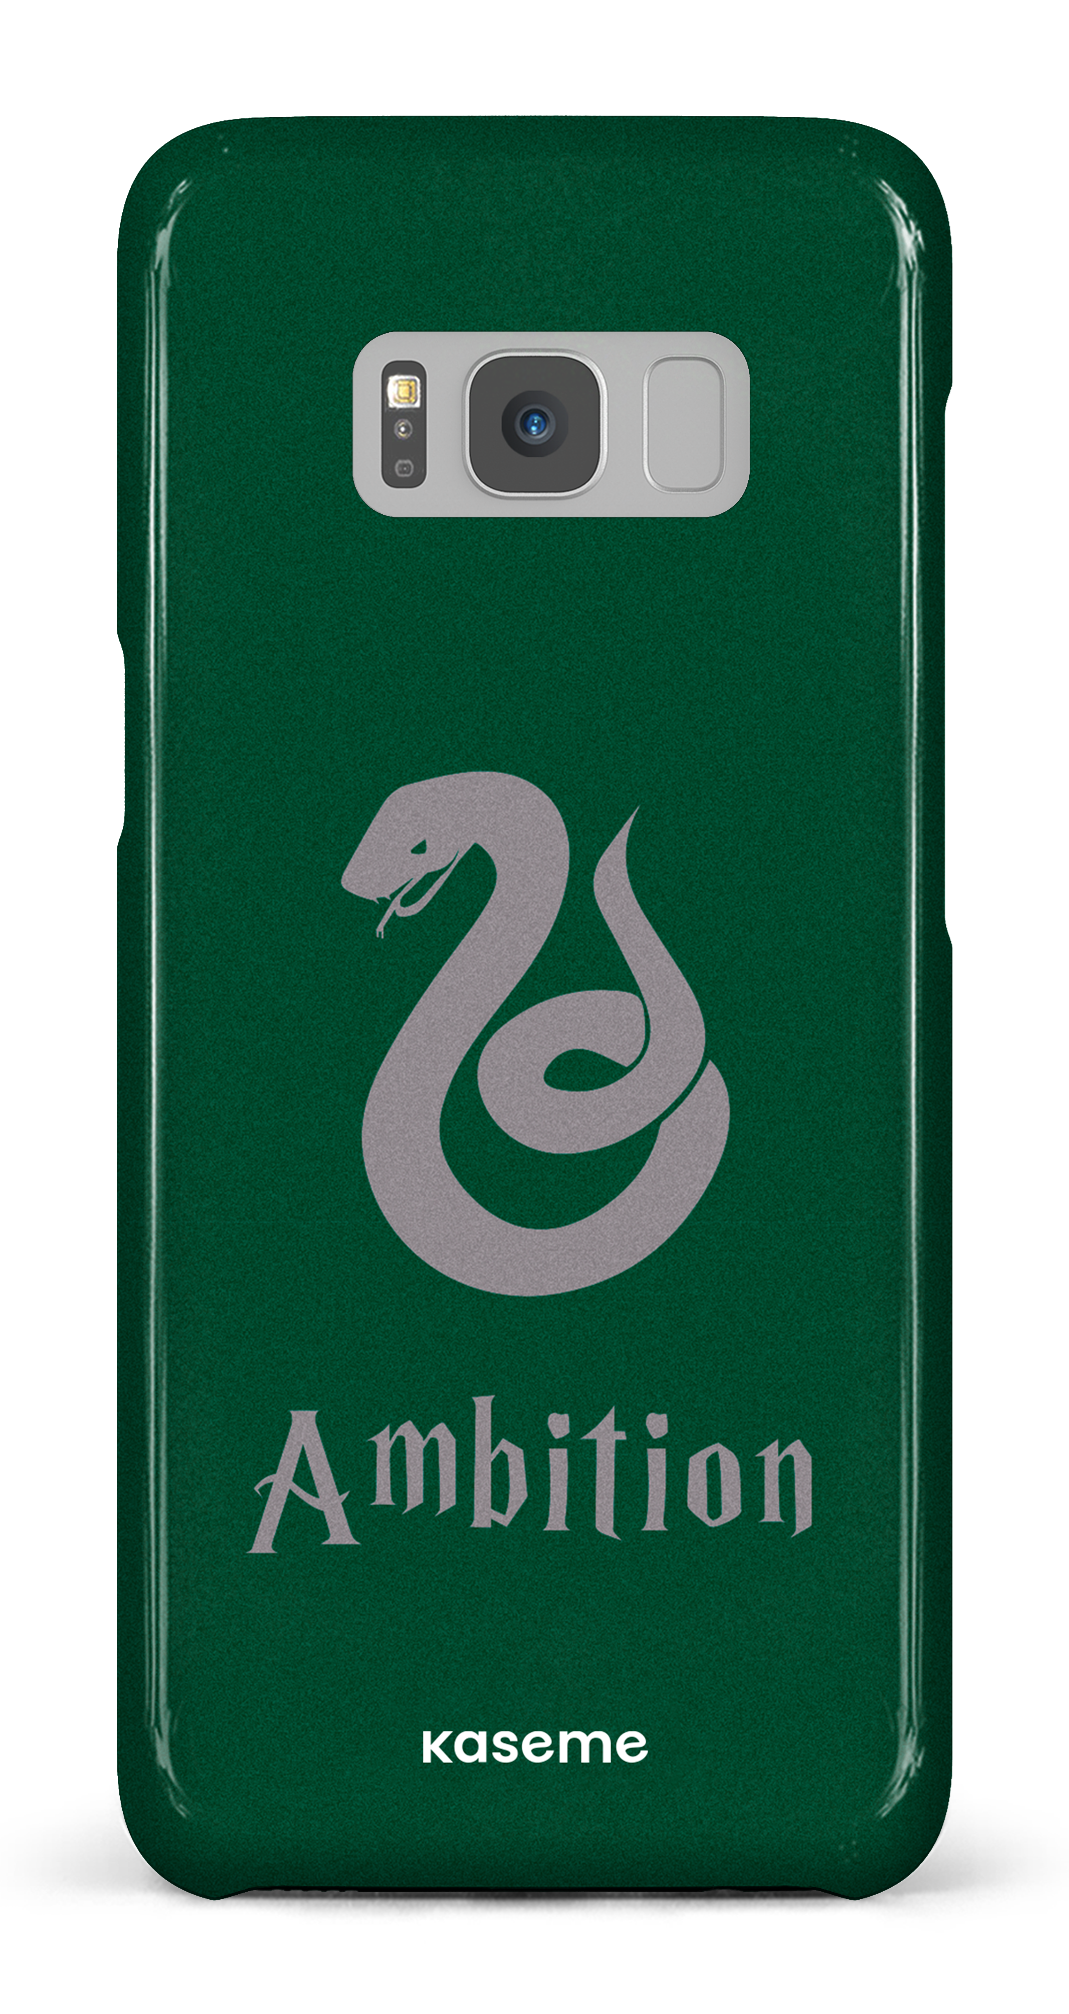 Ambition - Galaxy S8